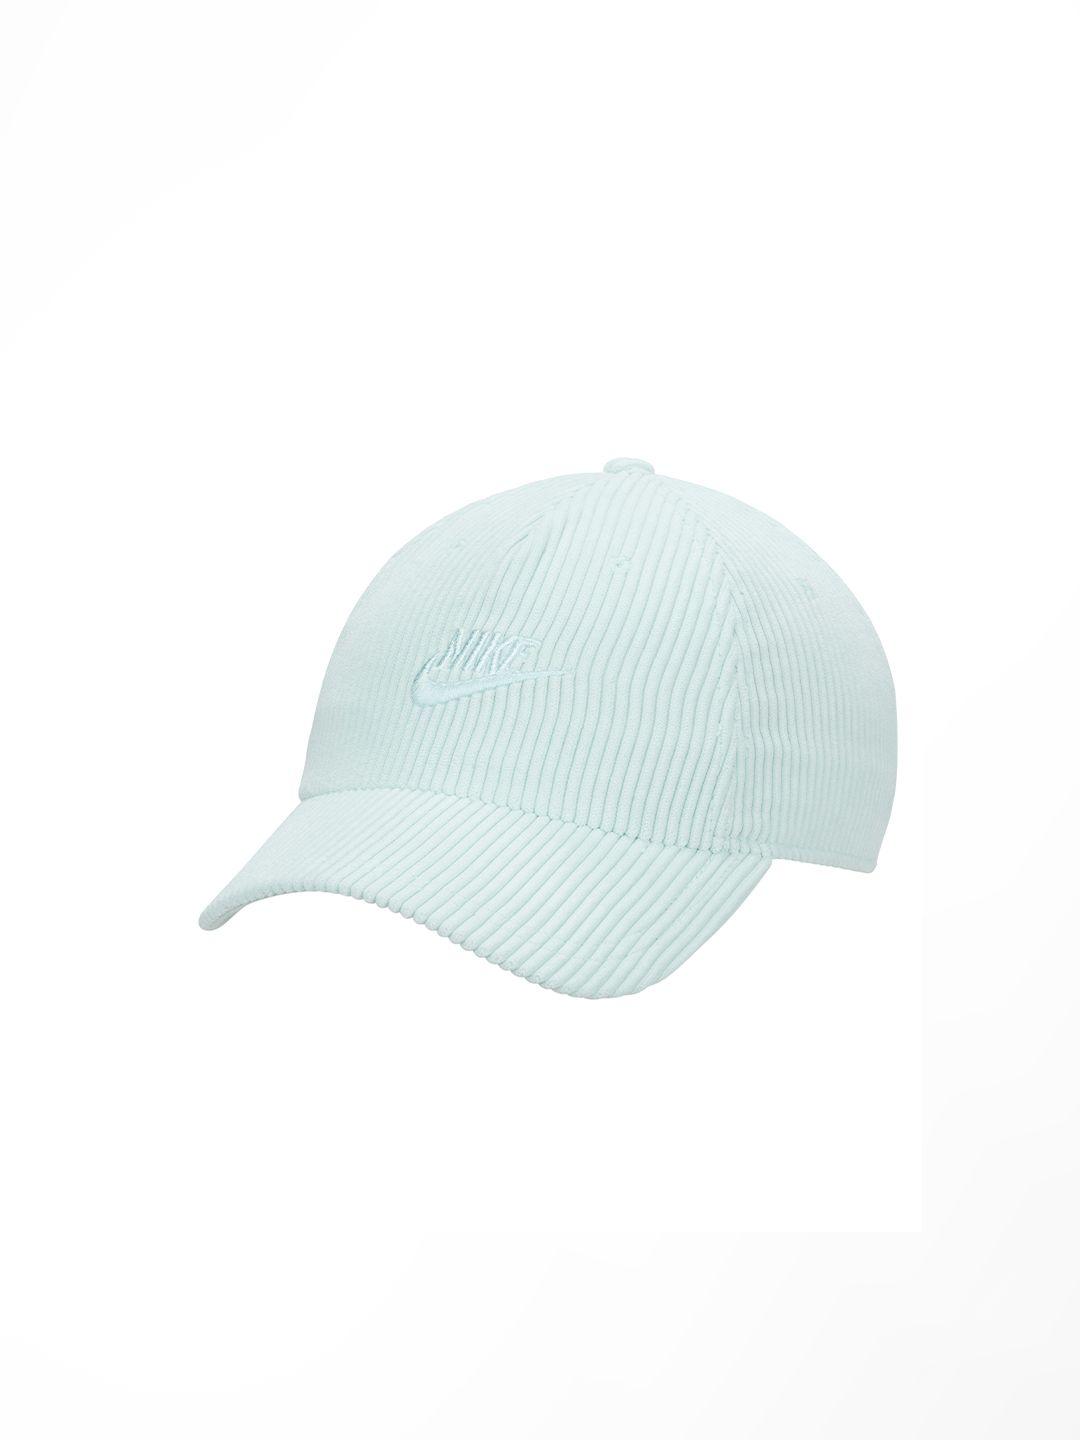 nike-textured-baseball-cap